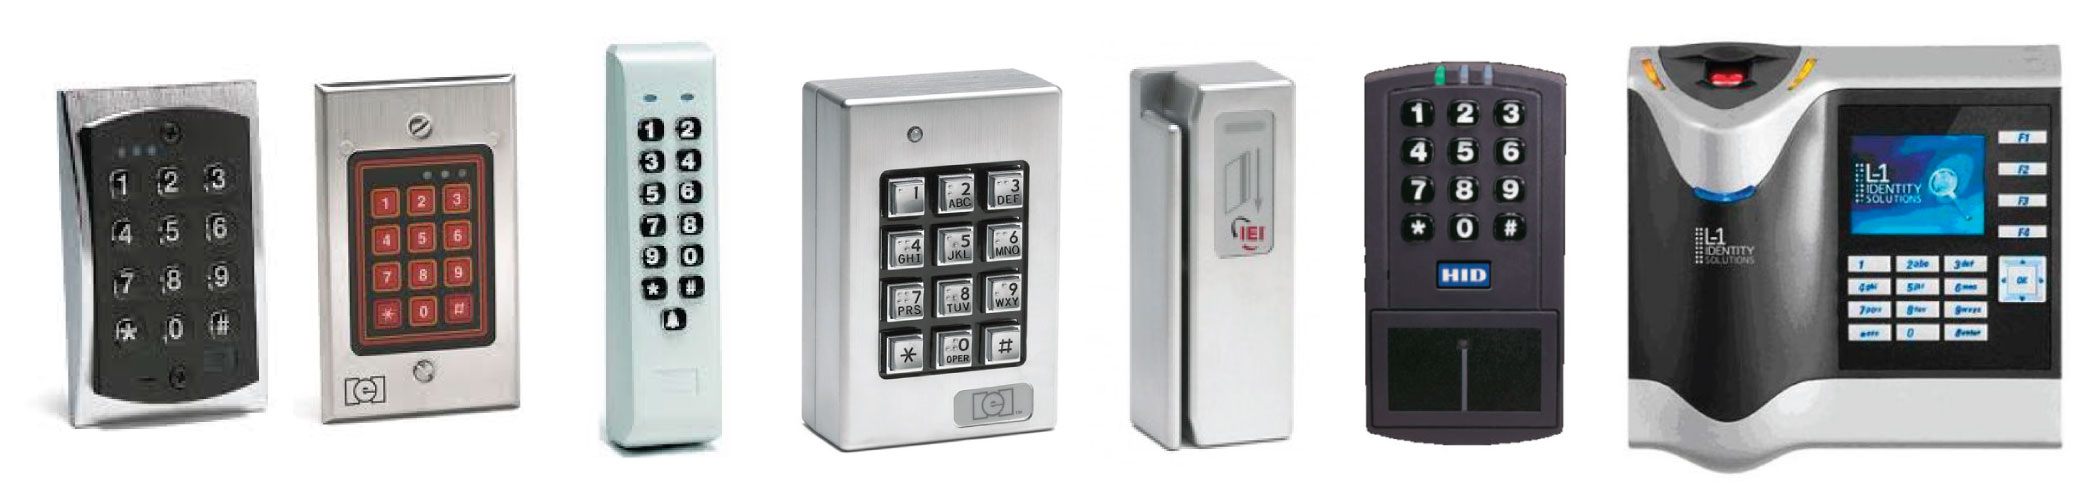 security-keypad-access-controls